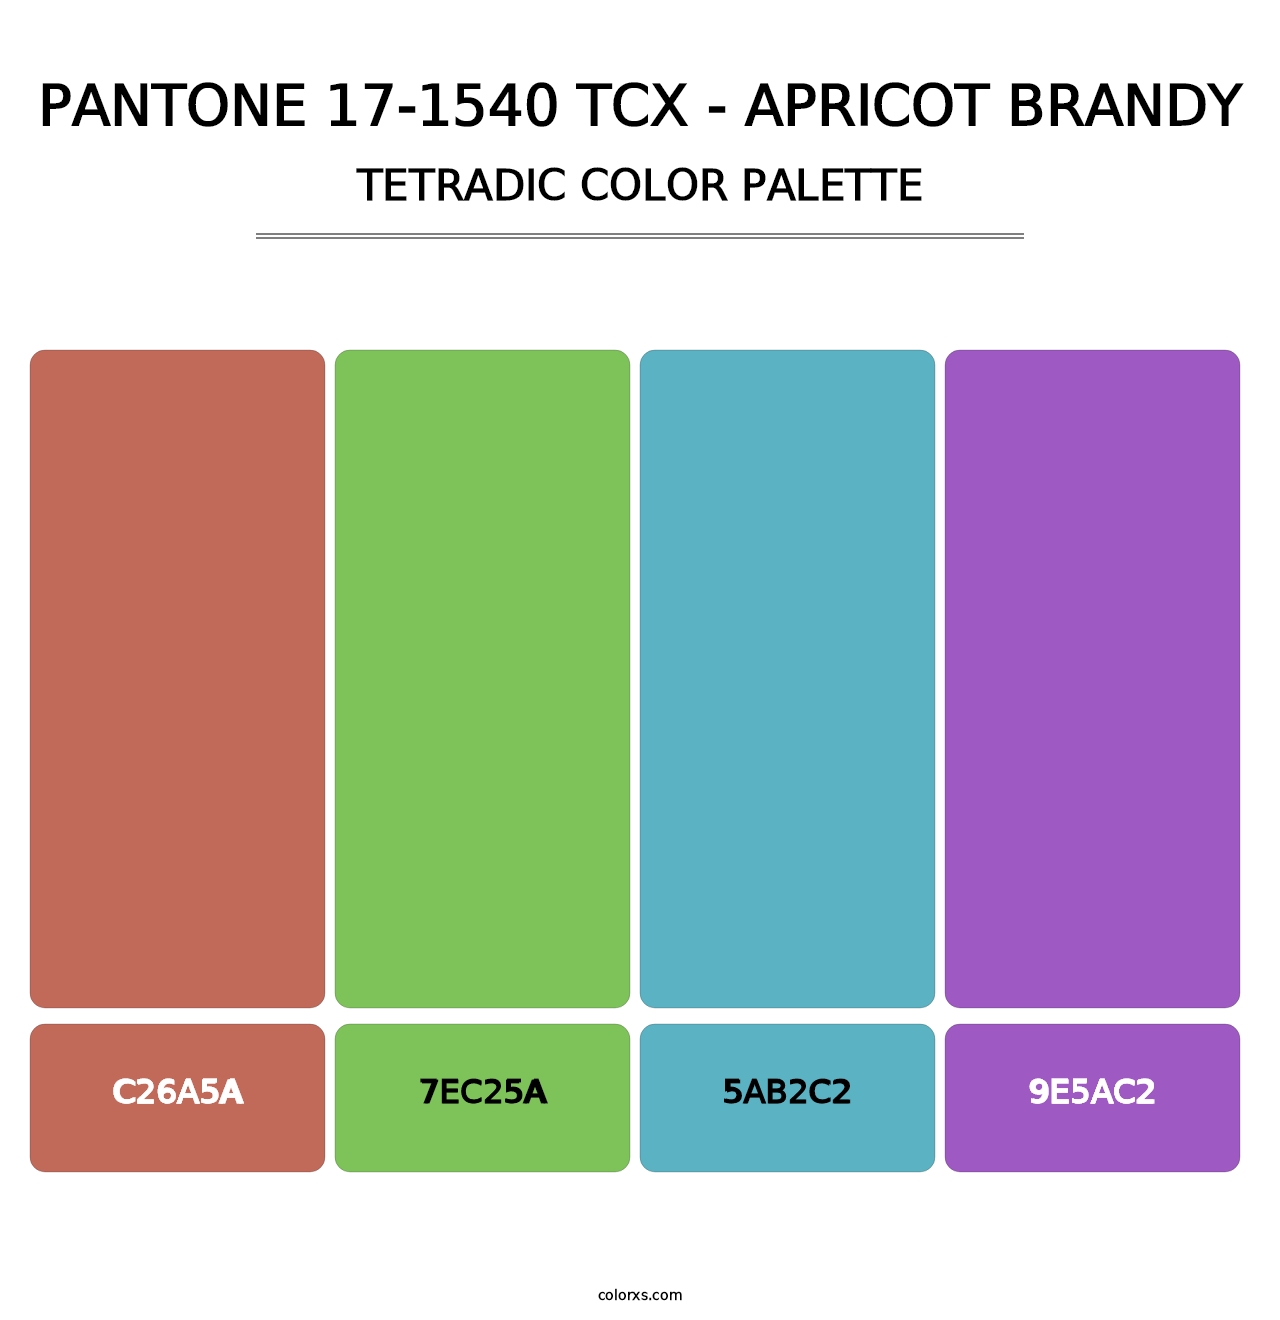 PANTONE 17-1540 TCX - Apricot Brandy - Tetradic Color Palette